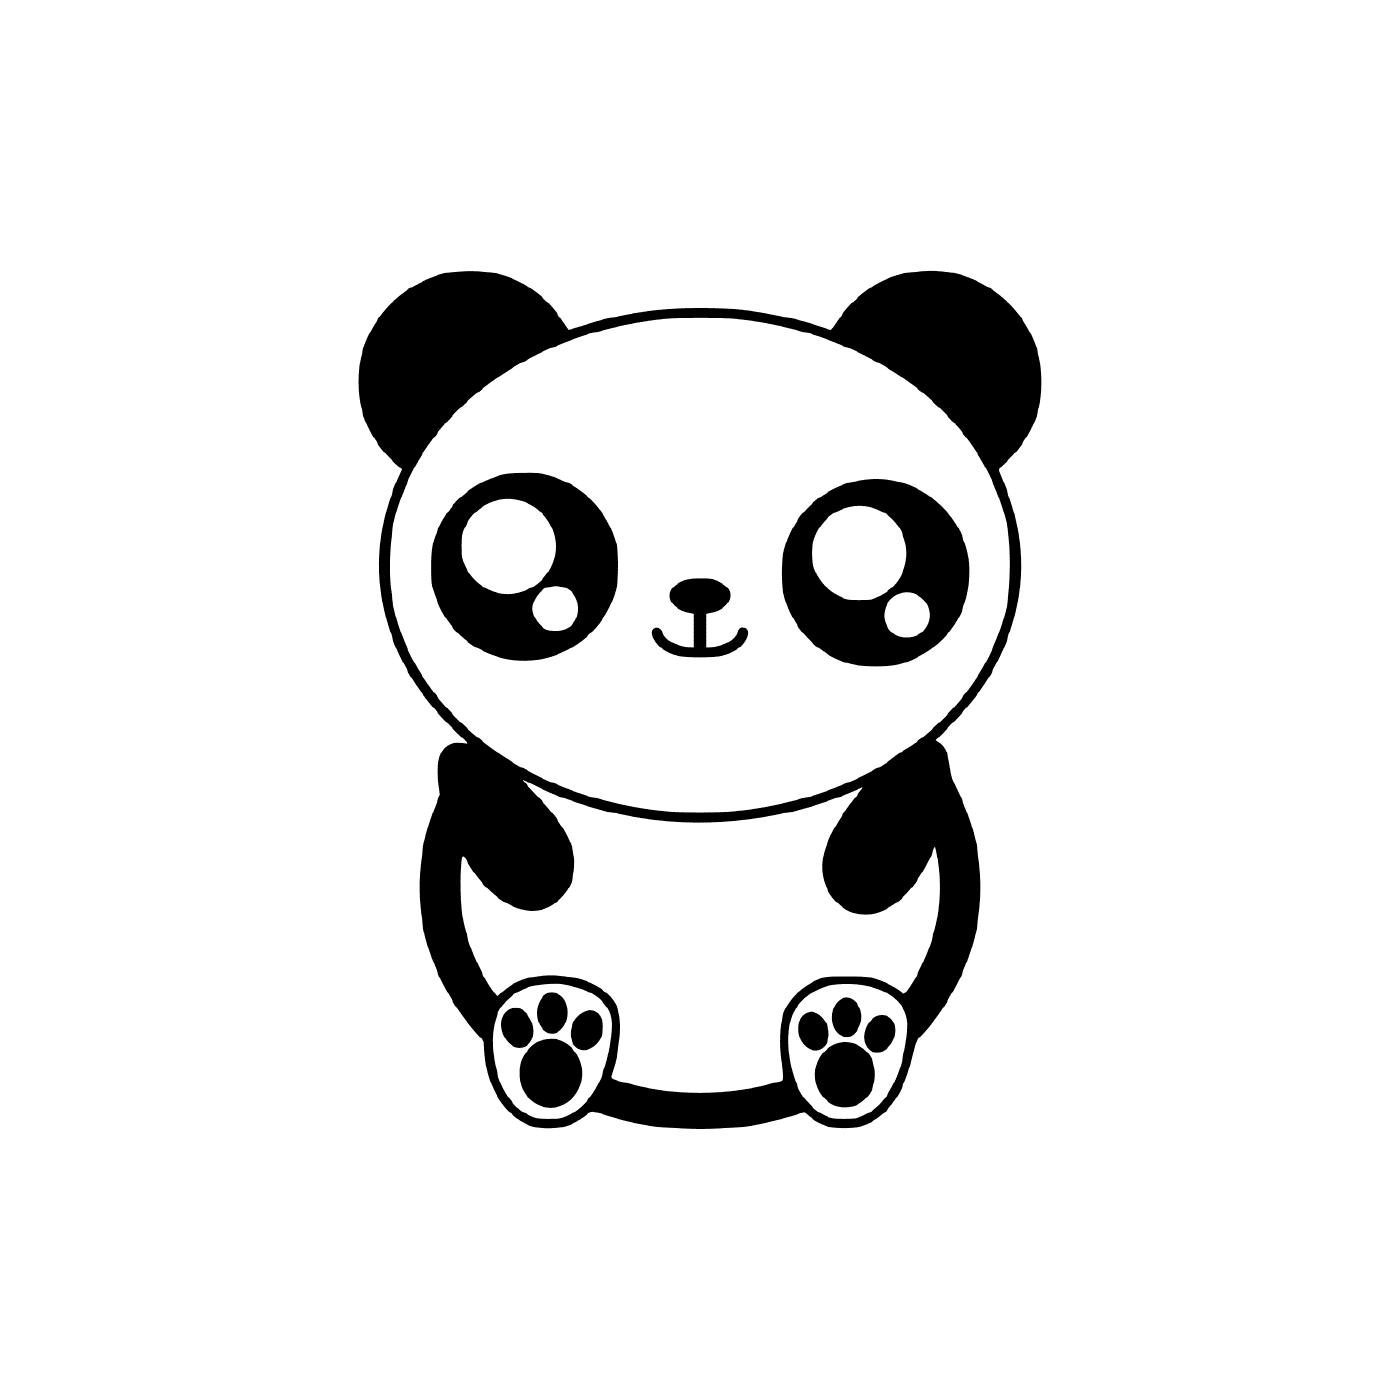  Un panda lindo 